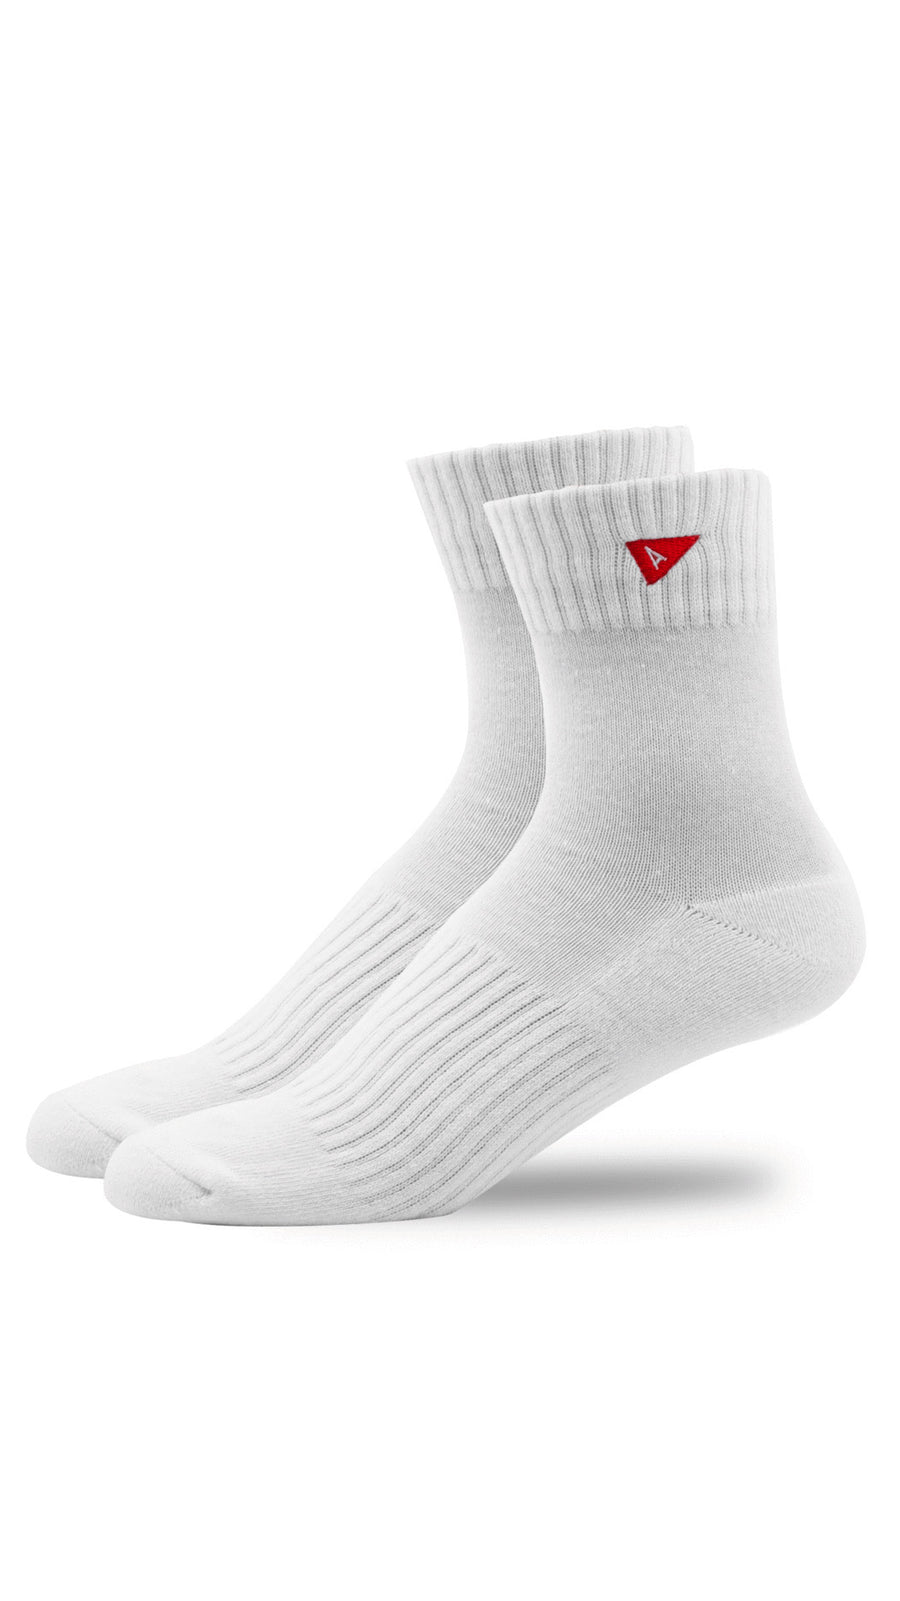 Arvin Goods Ankle Sock in White